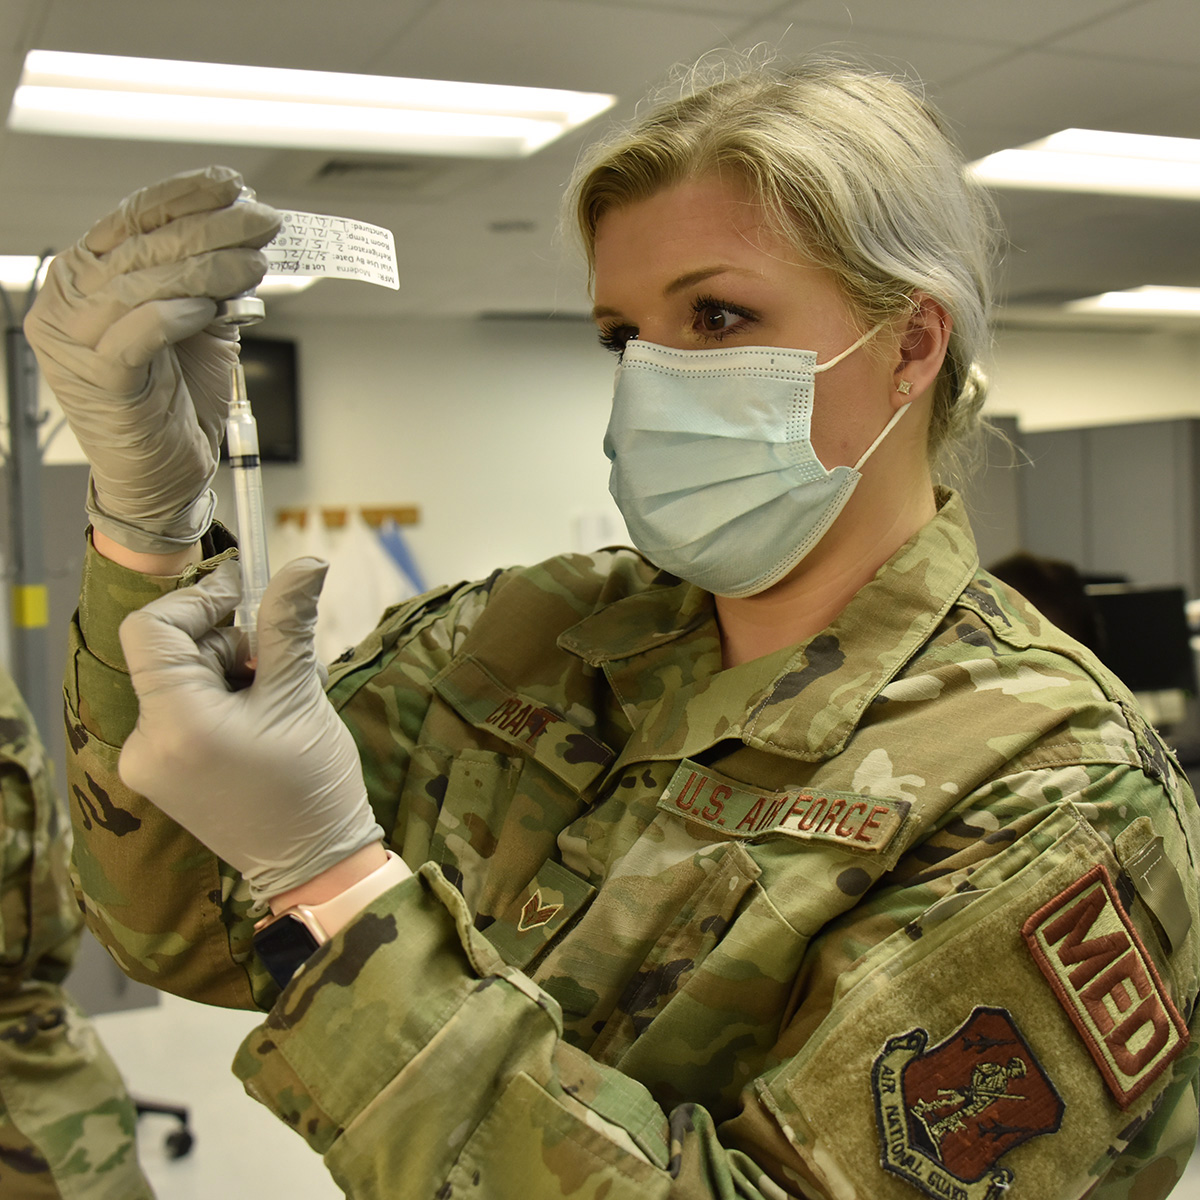 Senior Airman Skyler Craft prepares syringes with COVID-19 vaccination